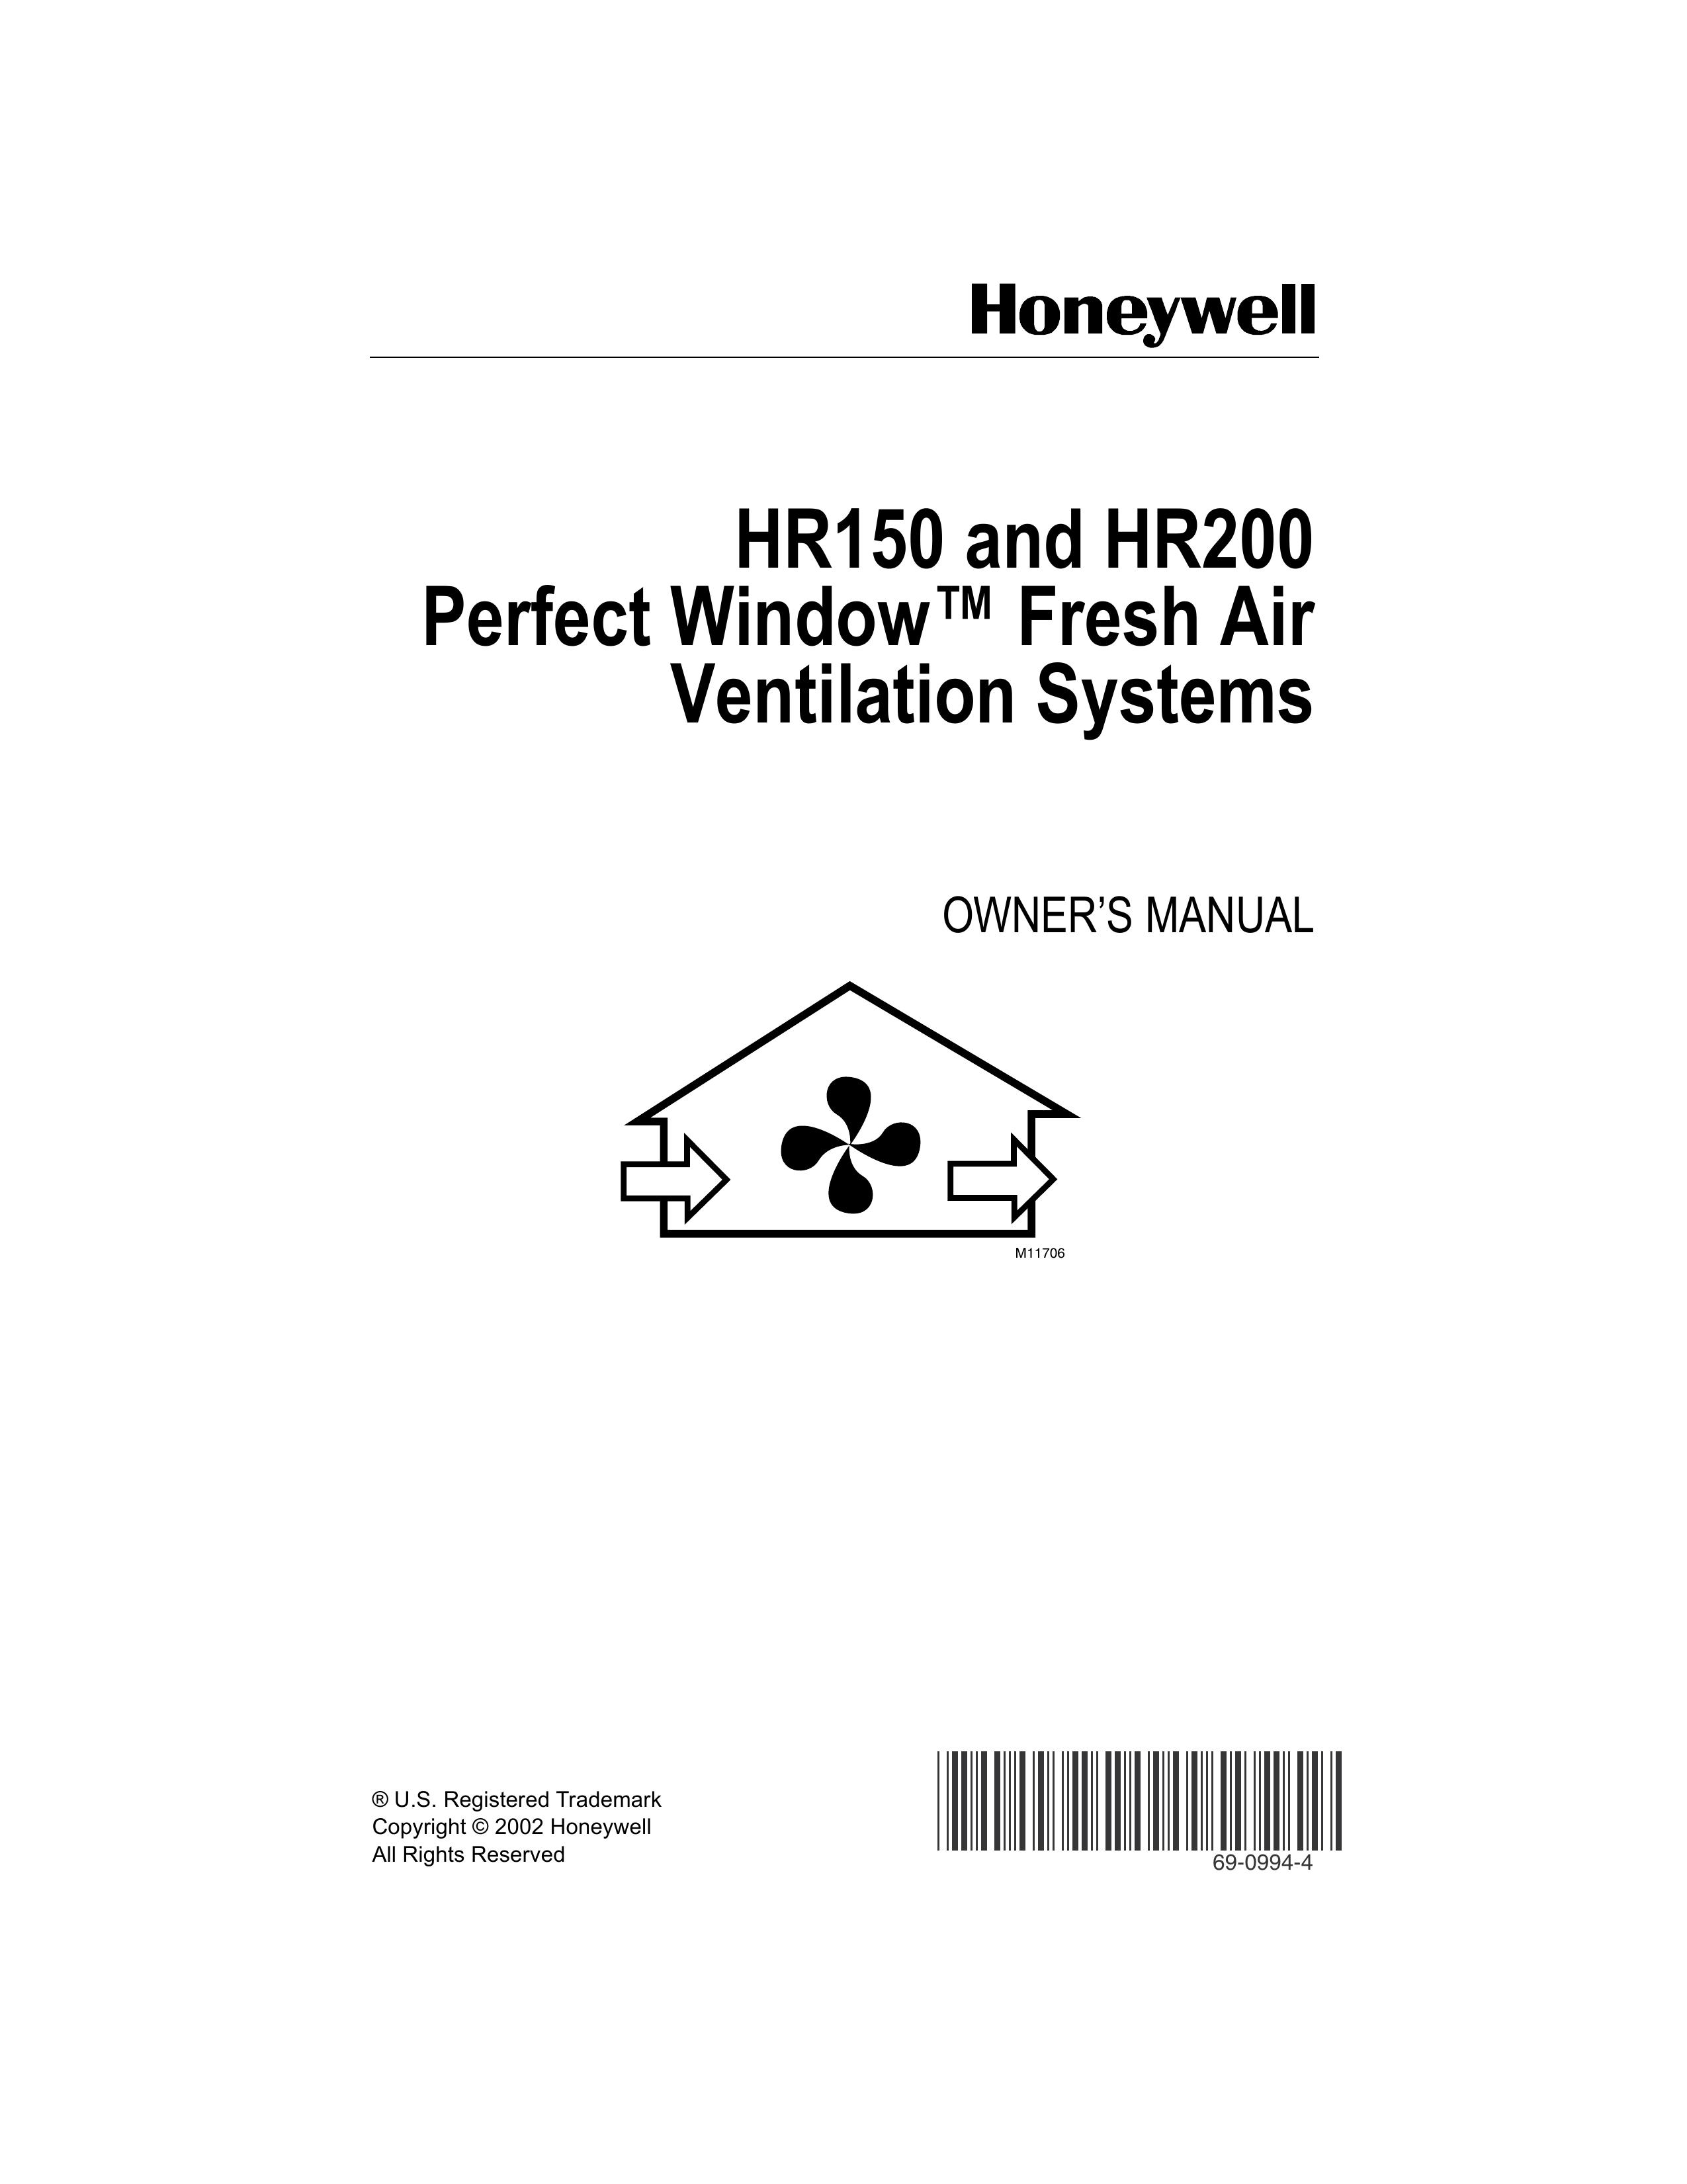 Honeywell HR200 Ventilation Hood User Manual